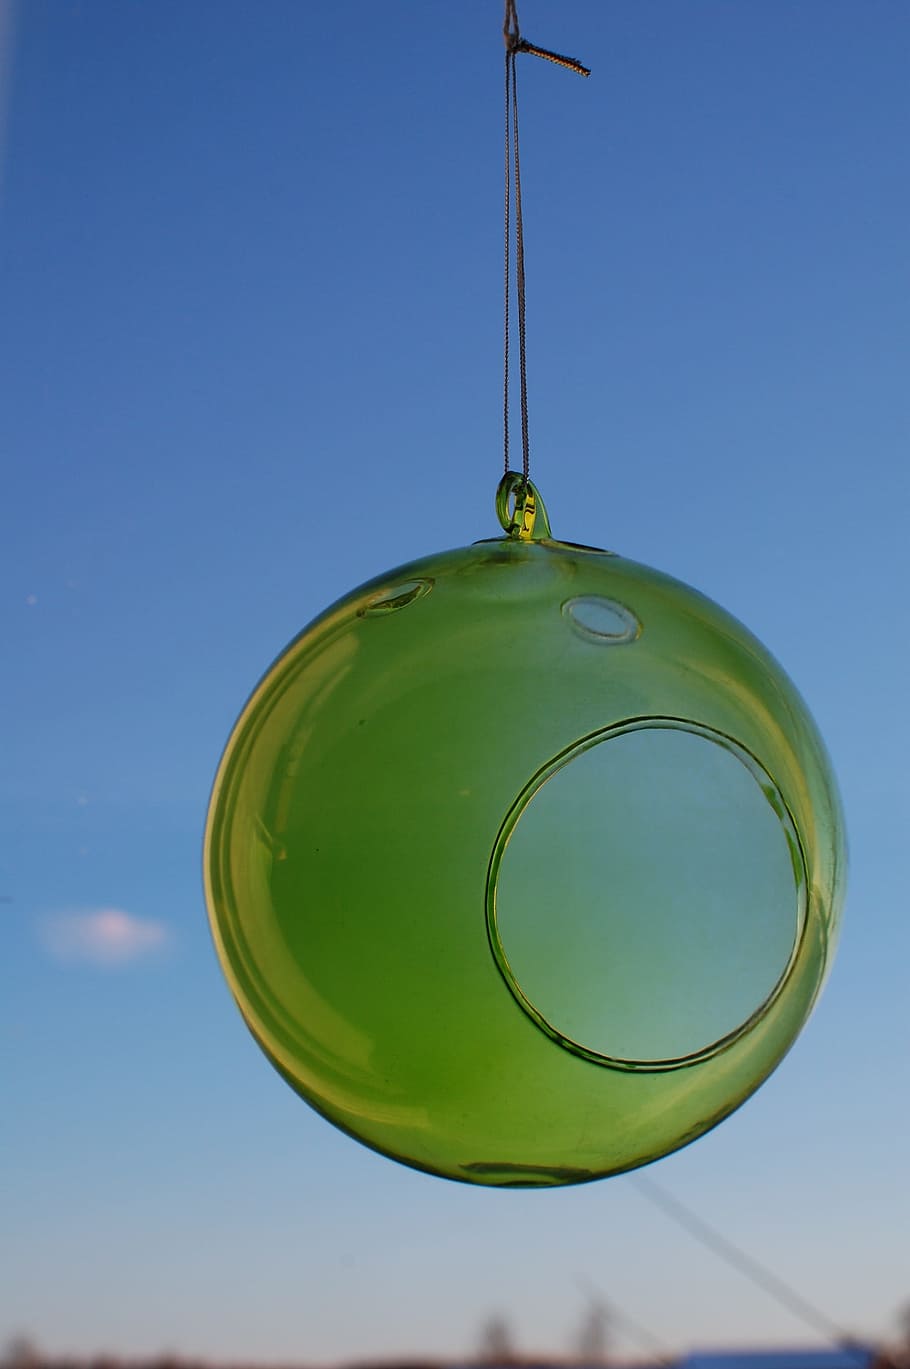 Sphere, Ornament, Glass, Ball, Hollow, green, design, glasswork